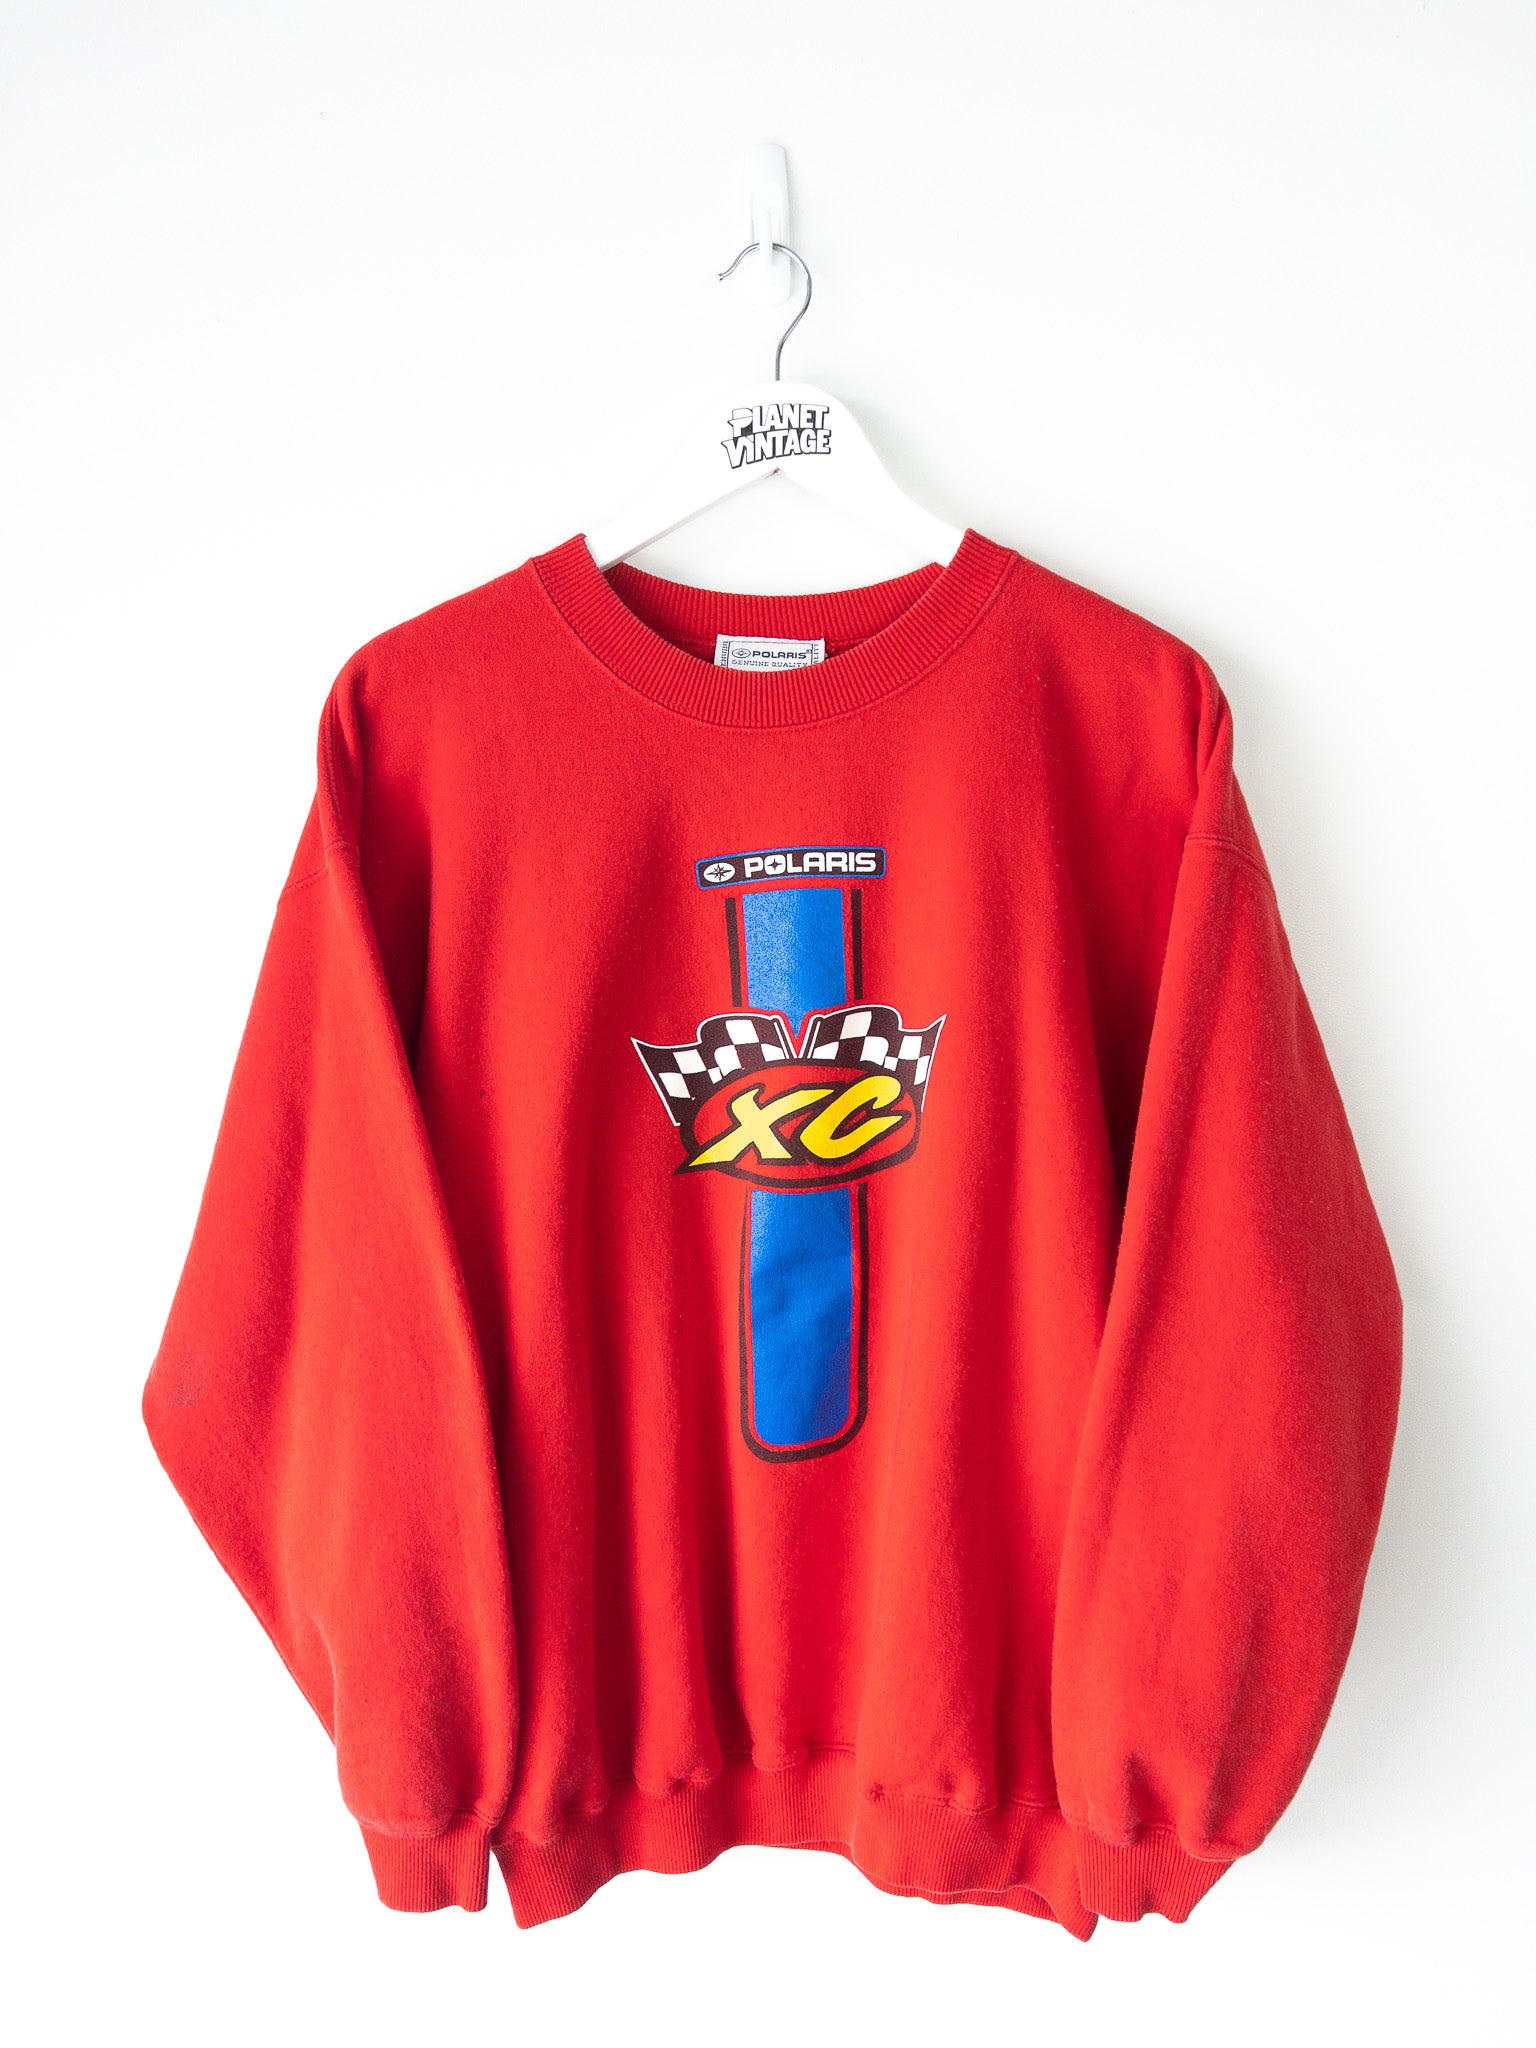 Vintage Polaris Racing Sweatshirt (L)